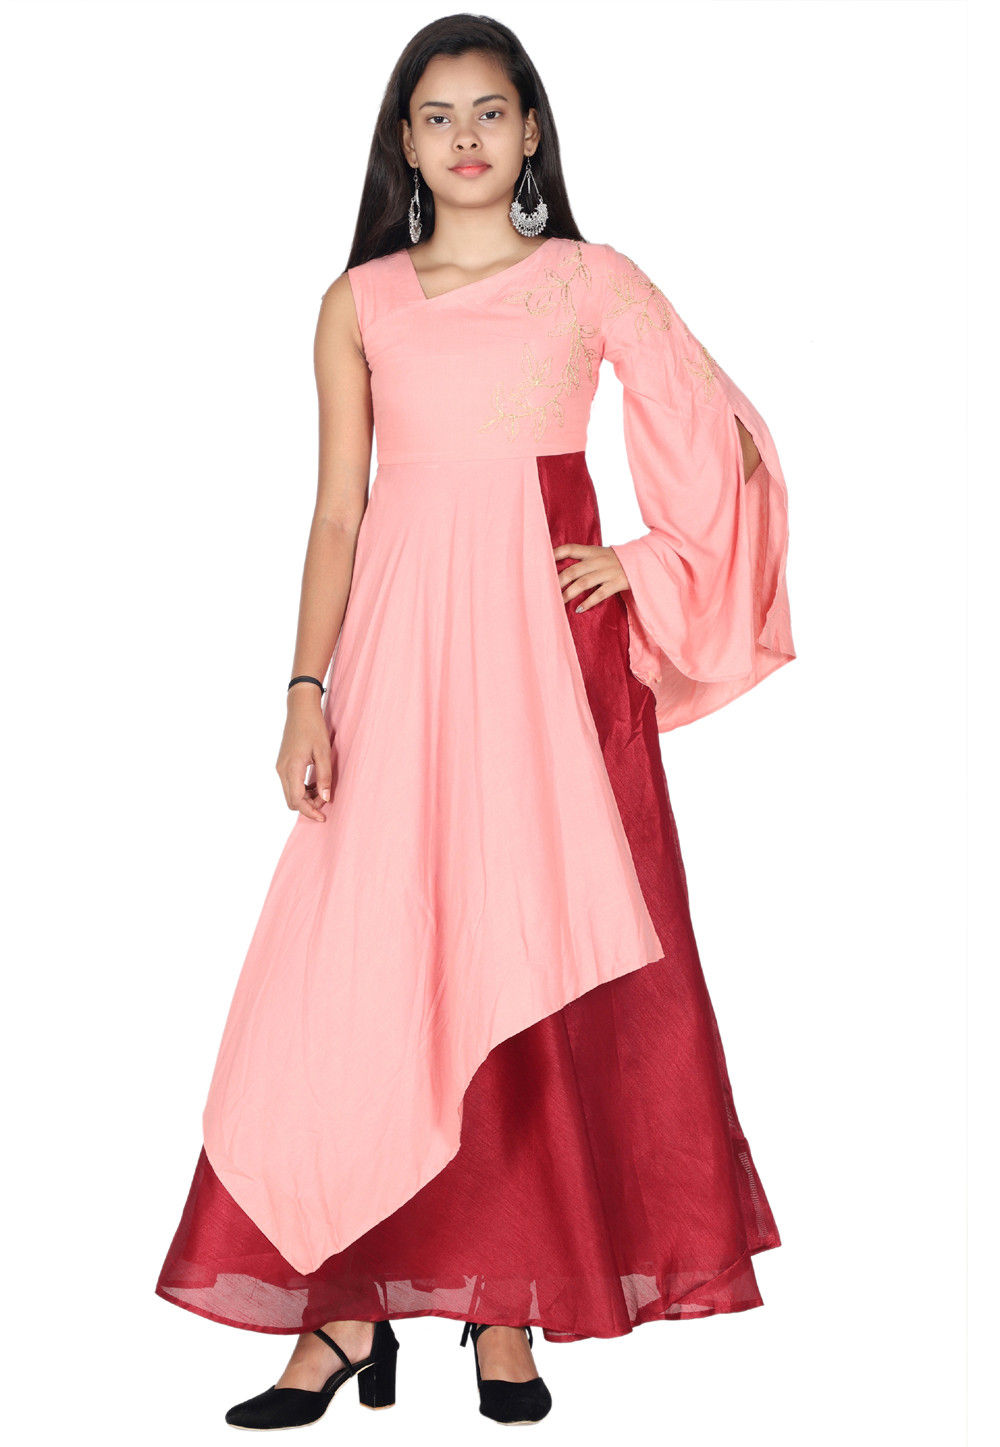 Maroon dress 👗 | Pakistani dress design, Stylish dress book, Beautiful  dress designs